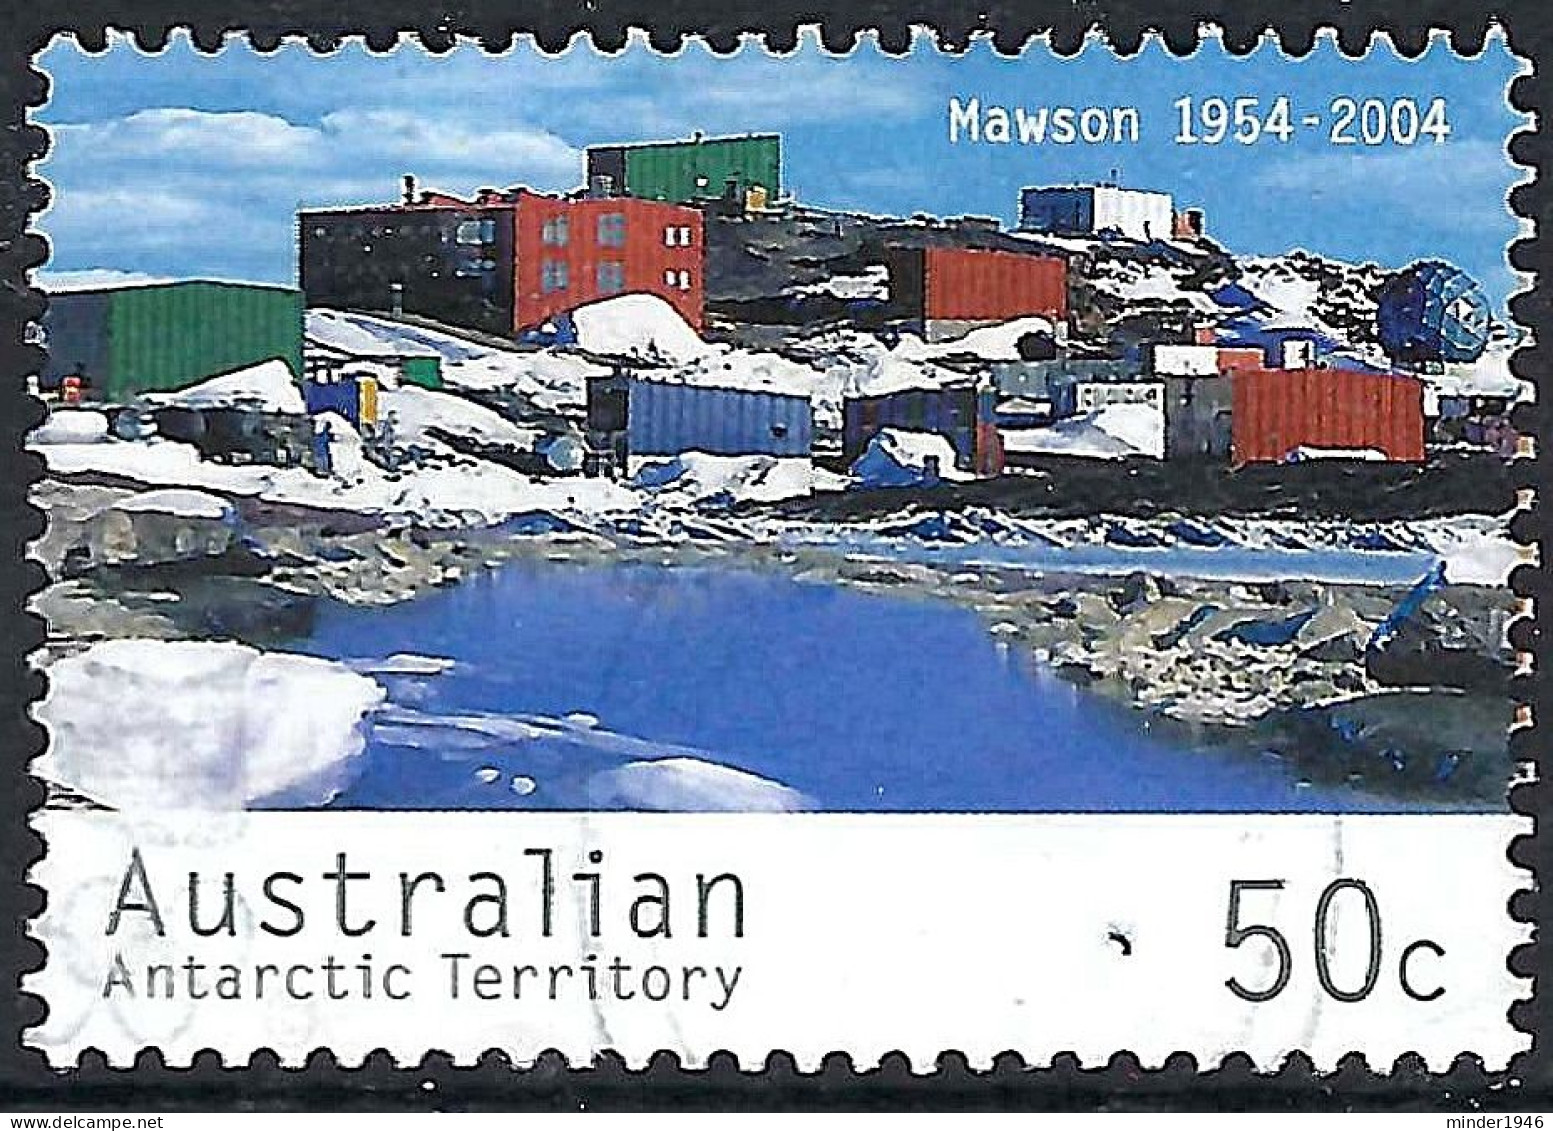 AUSTRALIAN ANTARCTIC TERRITORY (AAT) 2004 50c, Multicoloured, 50th Anniversary Mawson Station-Mawson Station FU - Usados